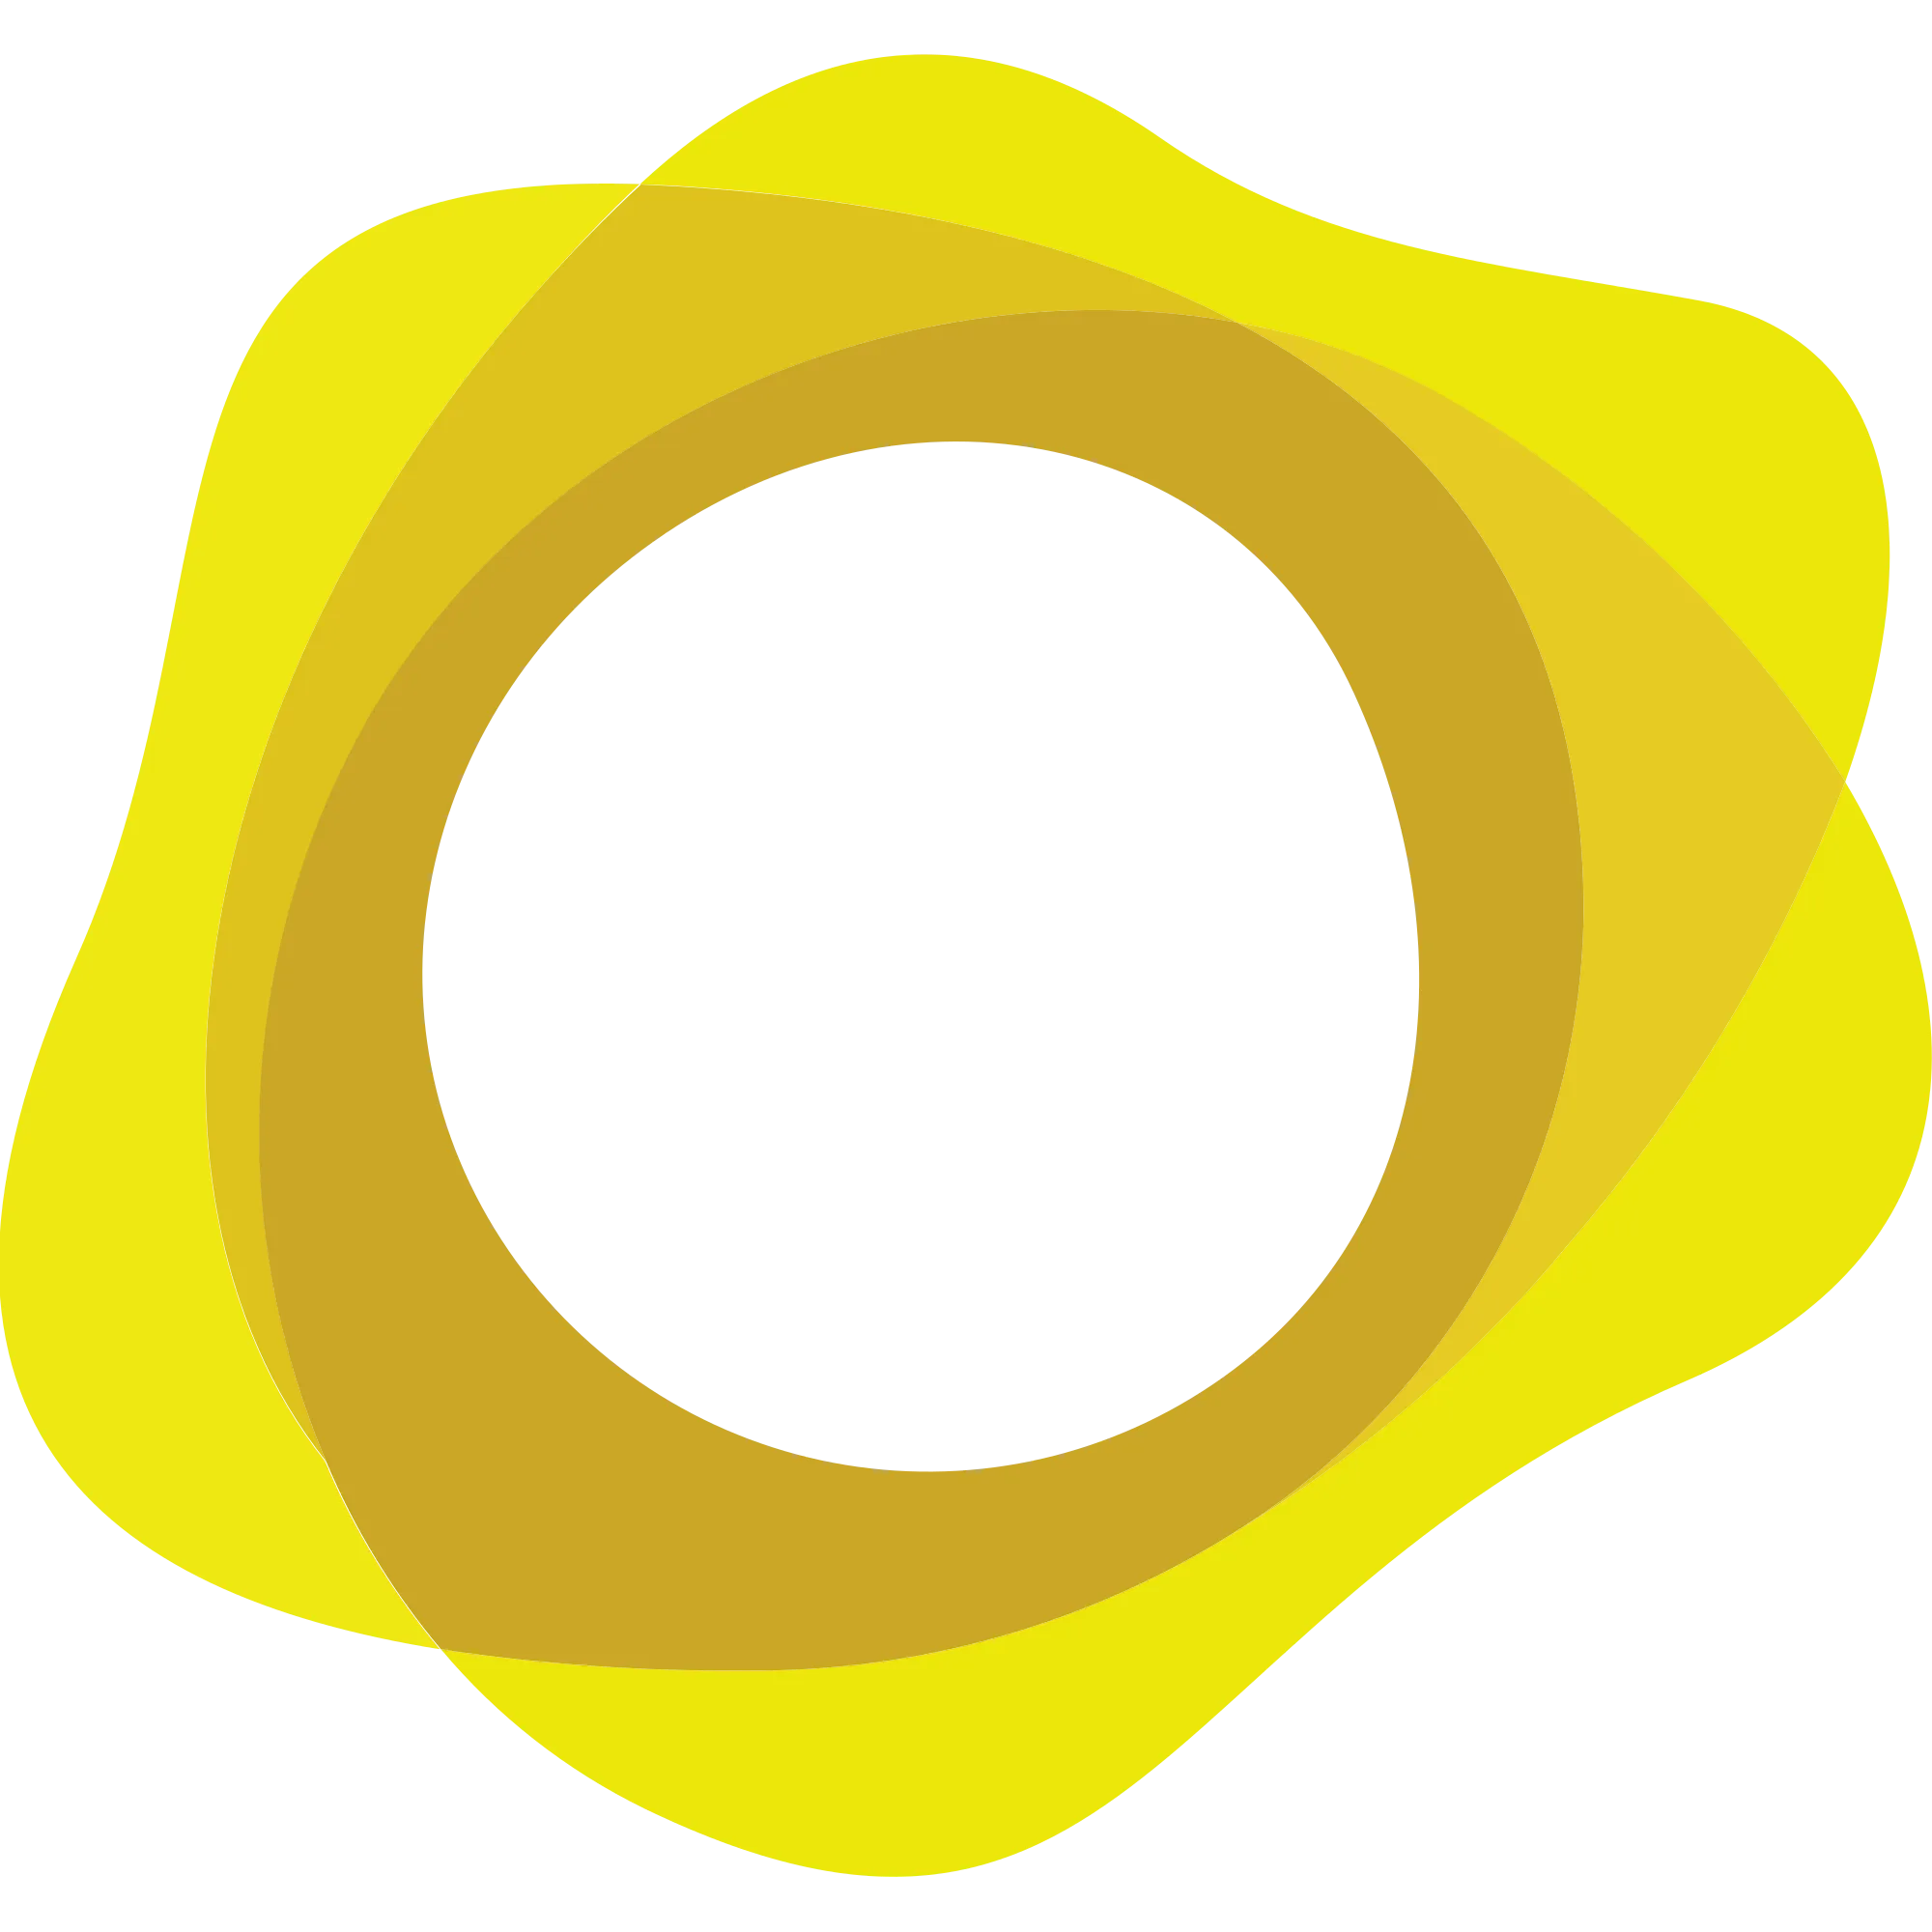 PAX Gold (PAXG) logo